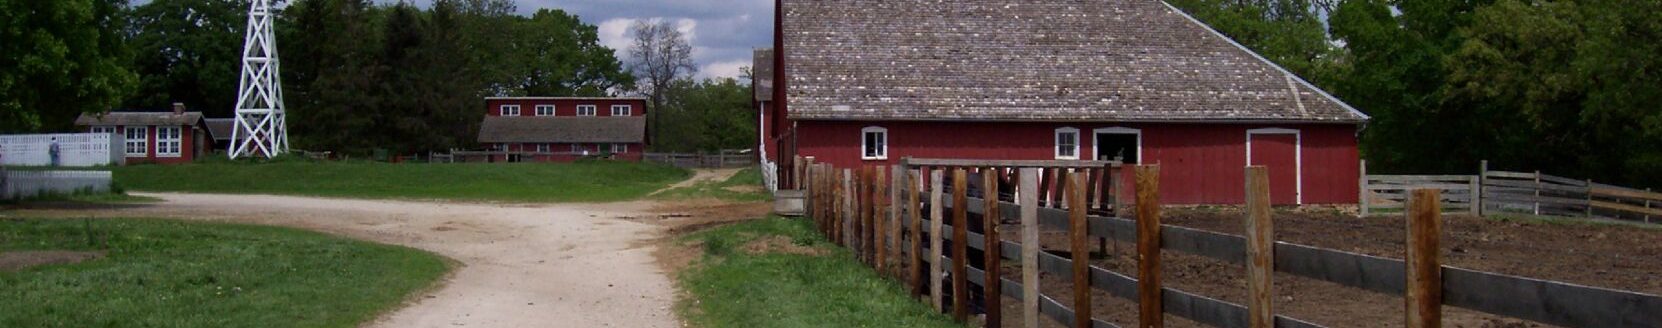 Farm Barn (Photo: Journal stock photo)